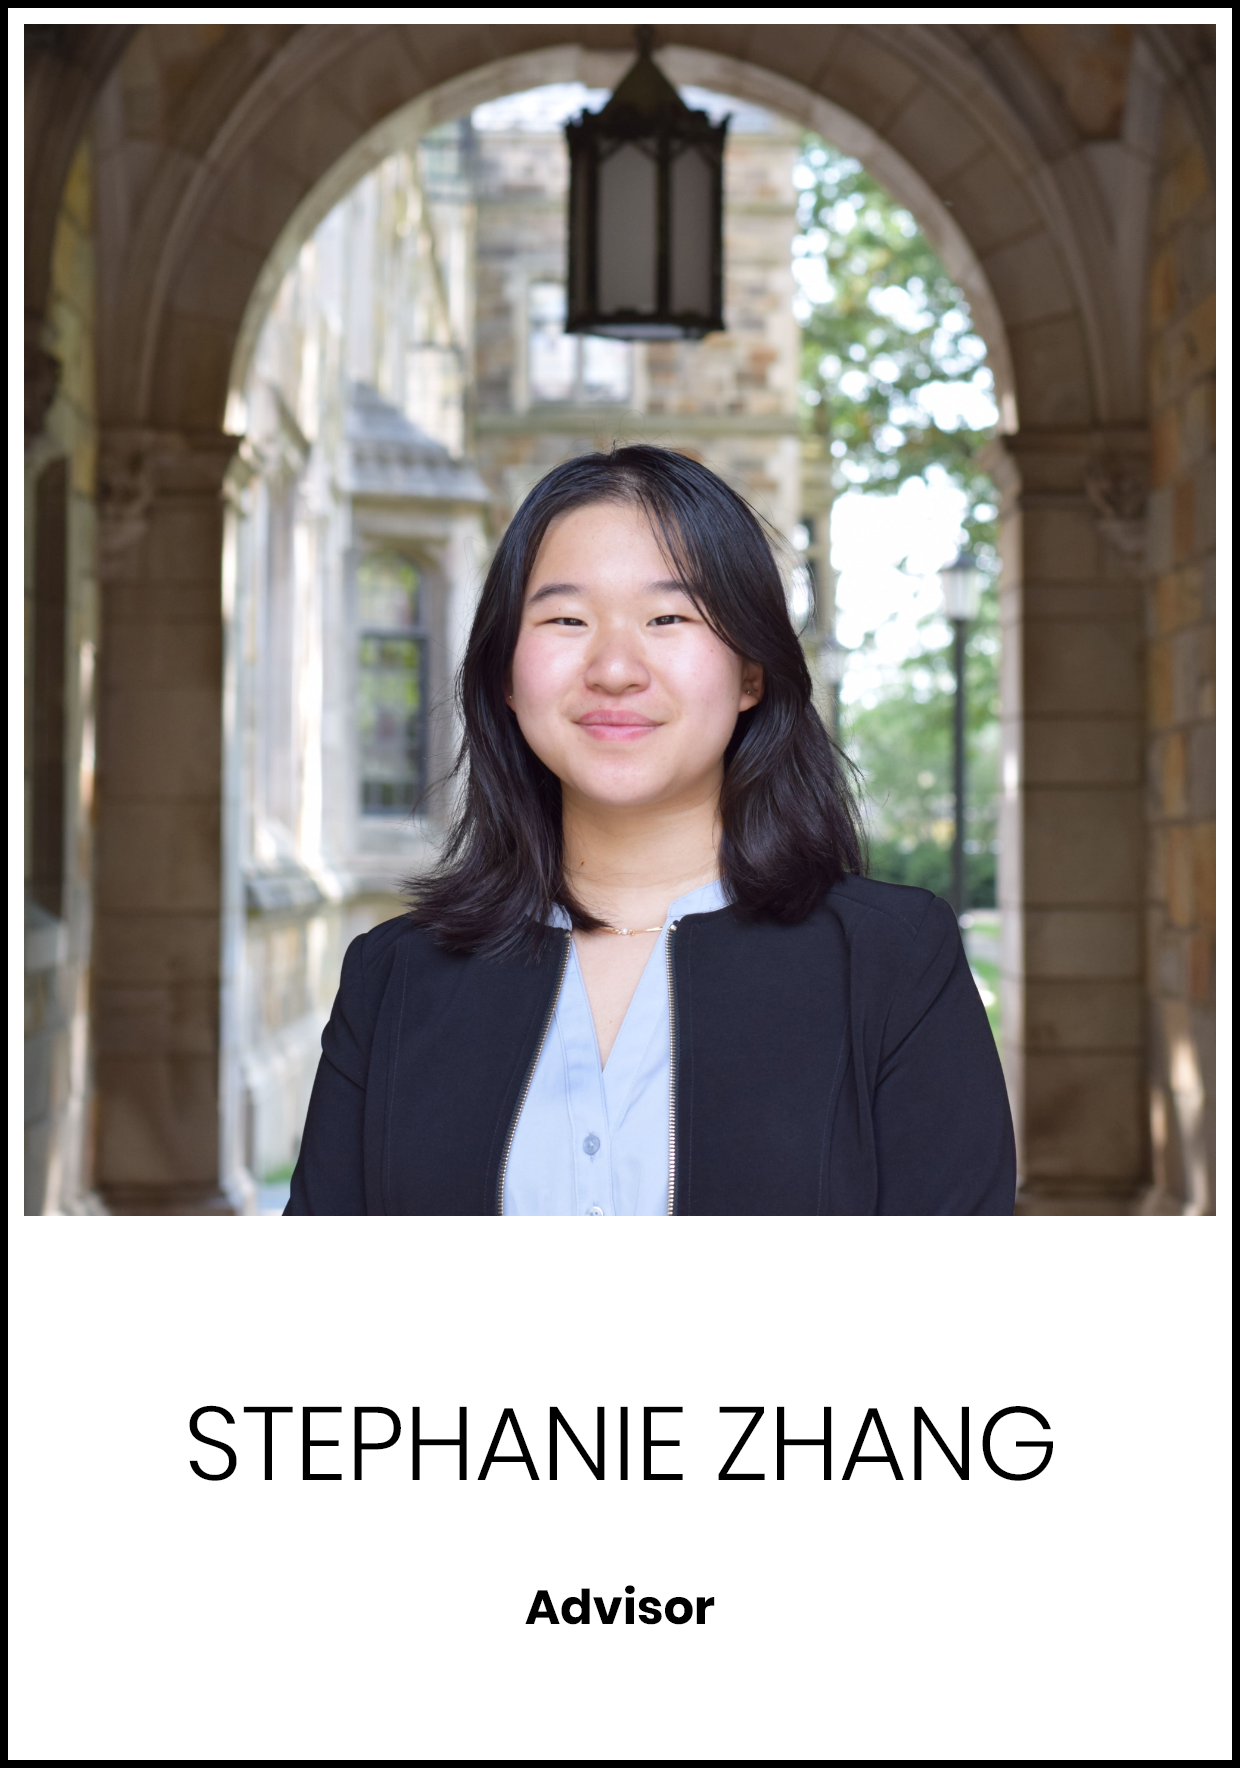 Stephanie zhang